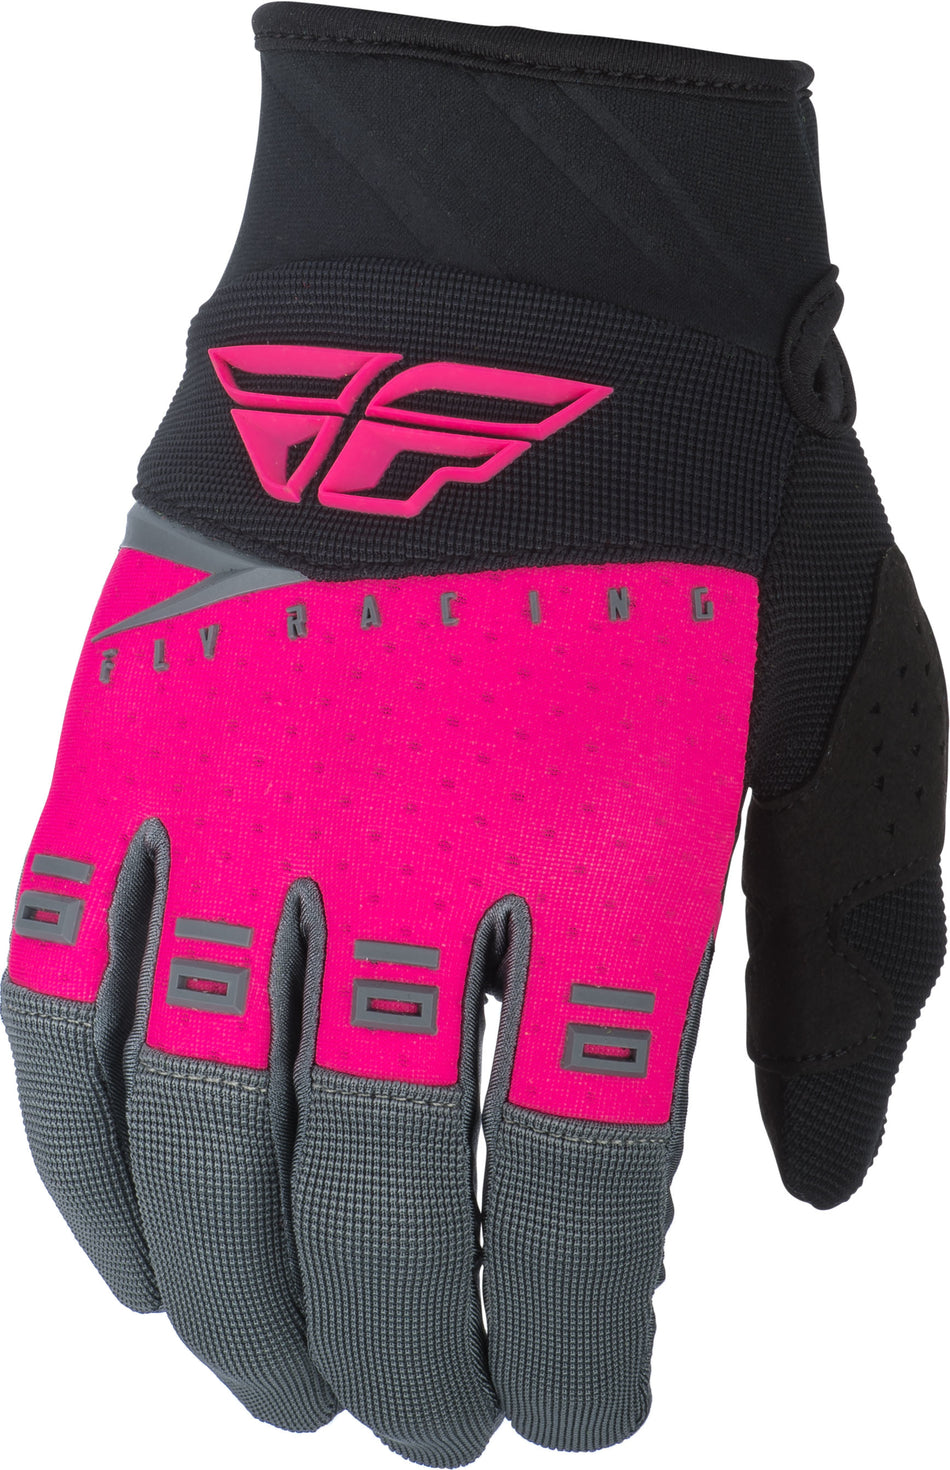 FLY RACING F-16 Gloves Neon Pink/Black/Grey Sz 08 372-91808